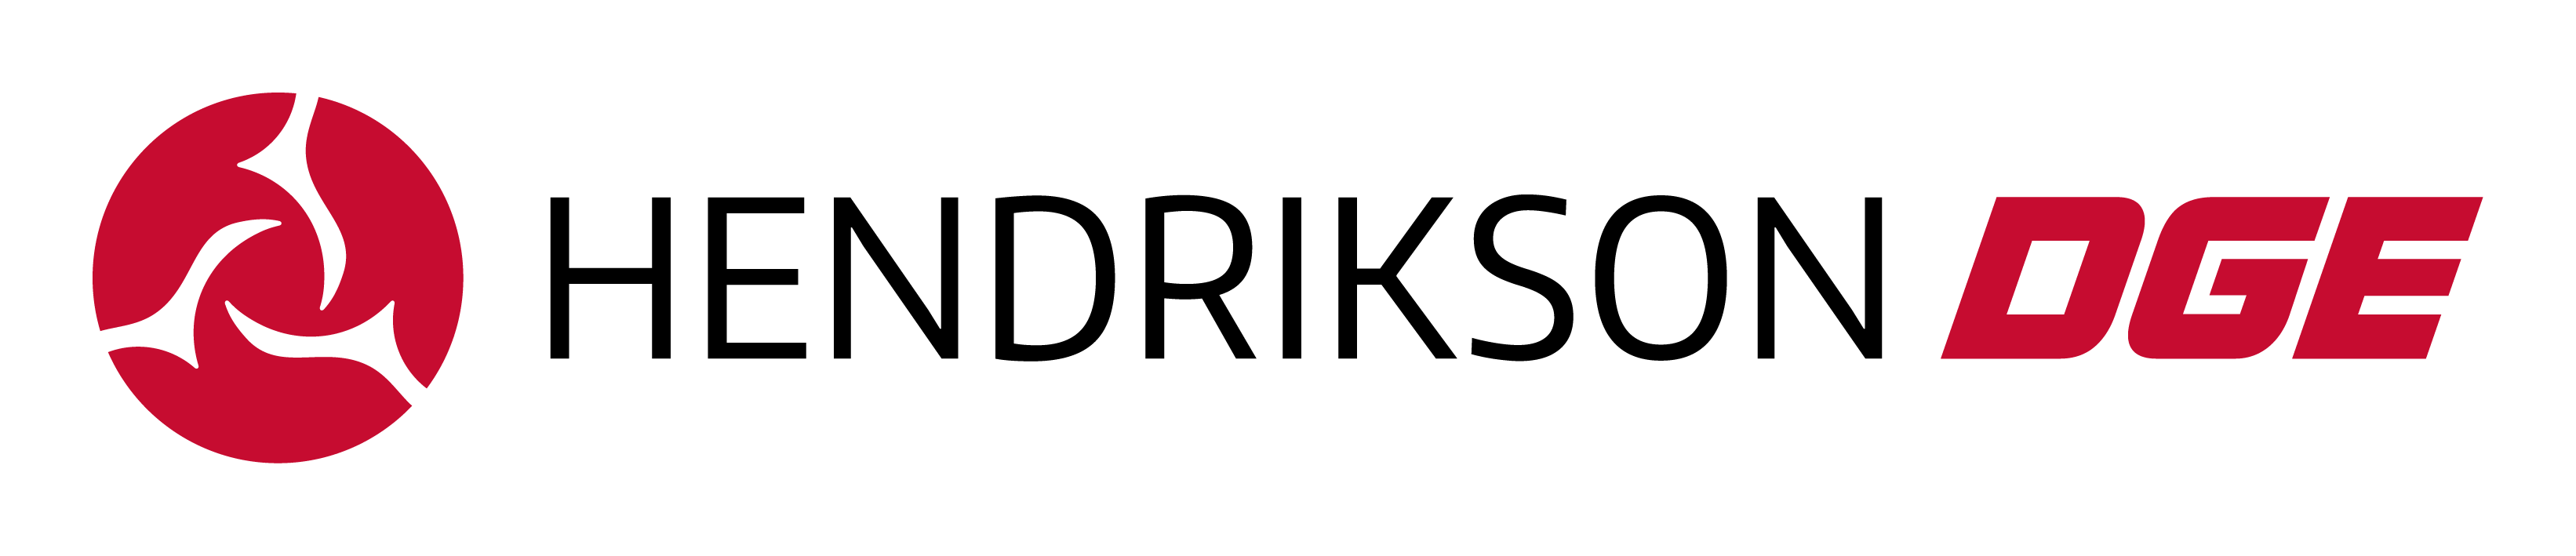 Hendrikson DGE logo